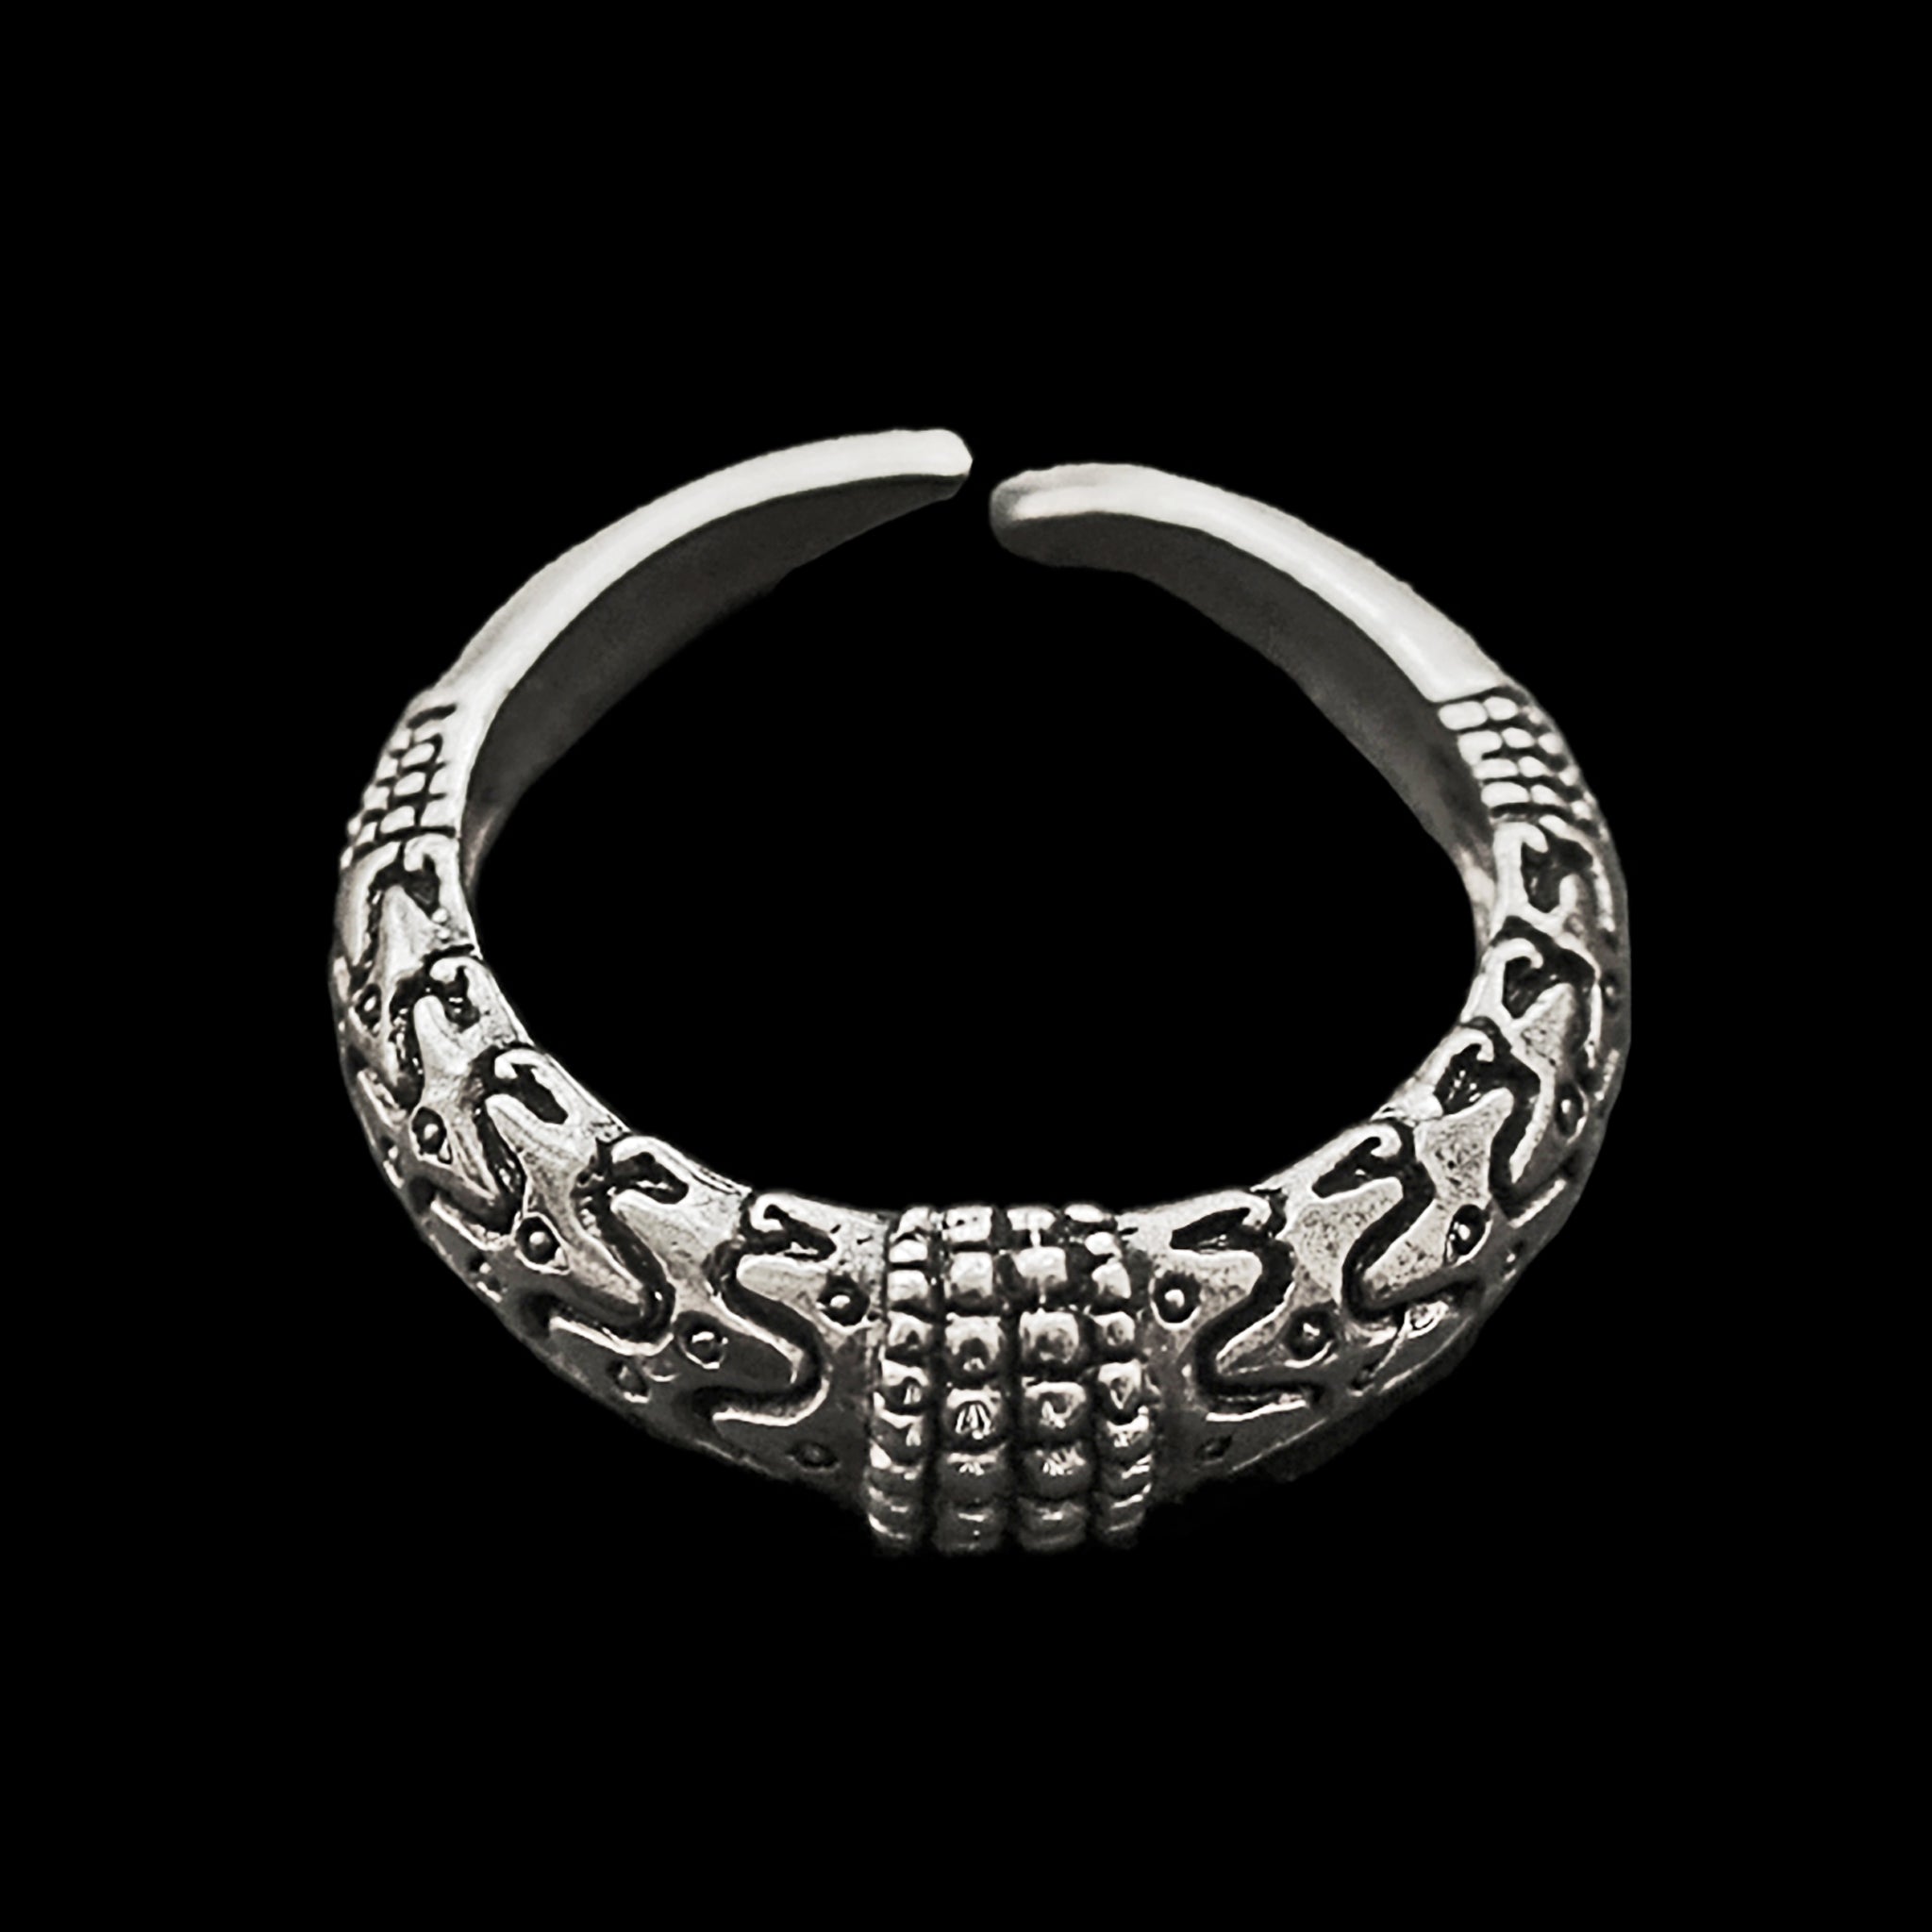 Replica Viking Ring from Orupgård, Falster in Denmark - Silver